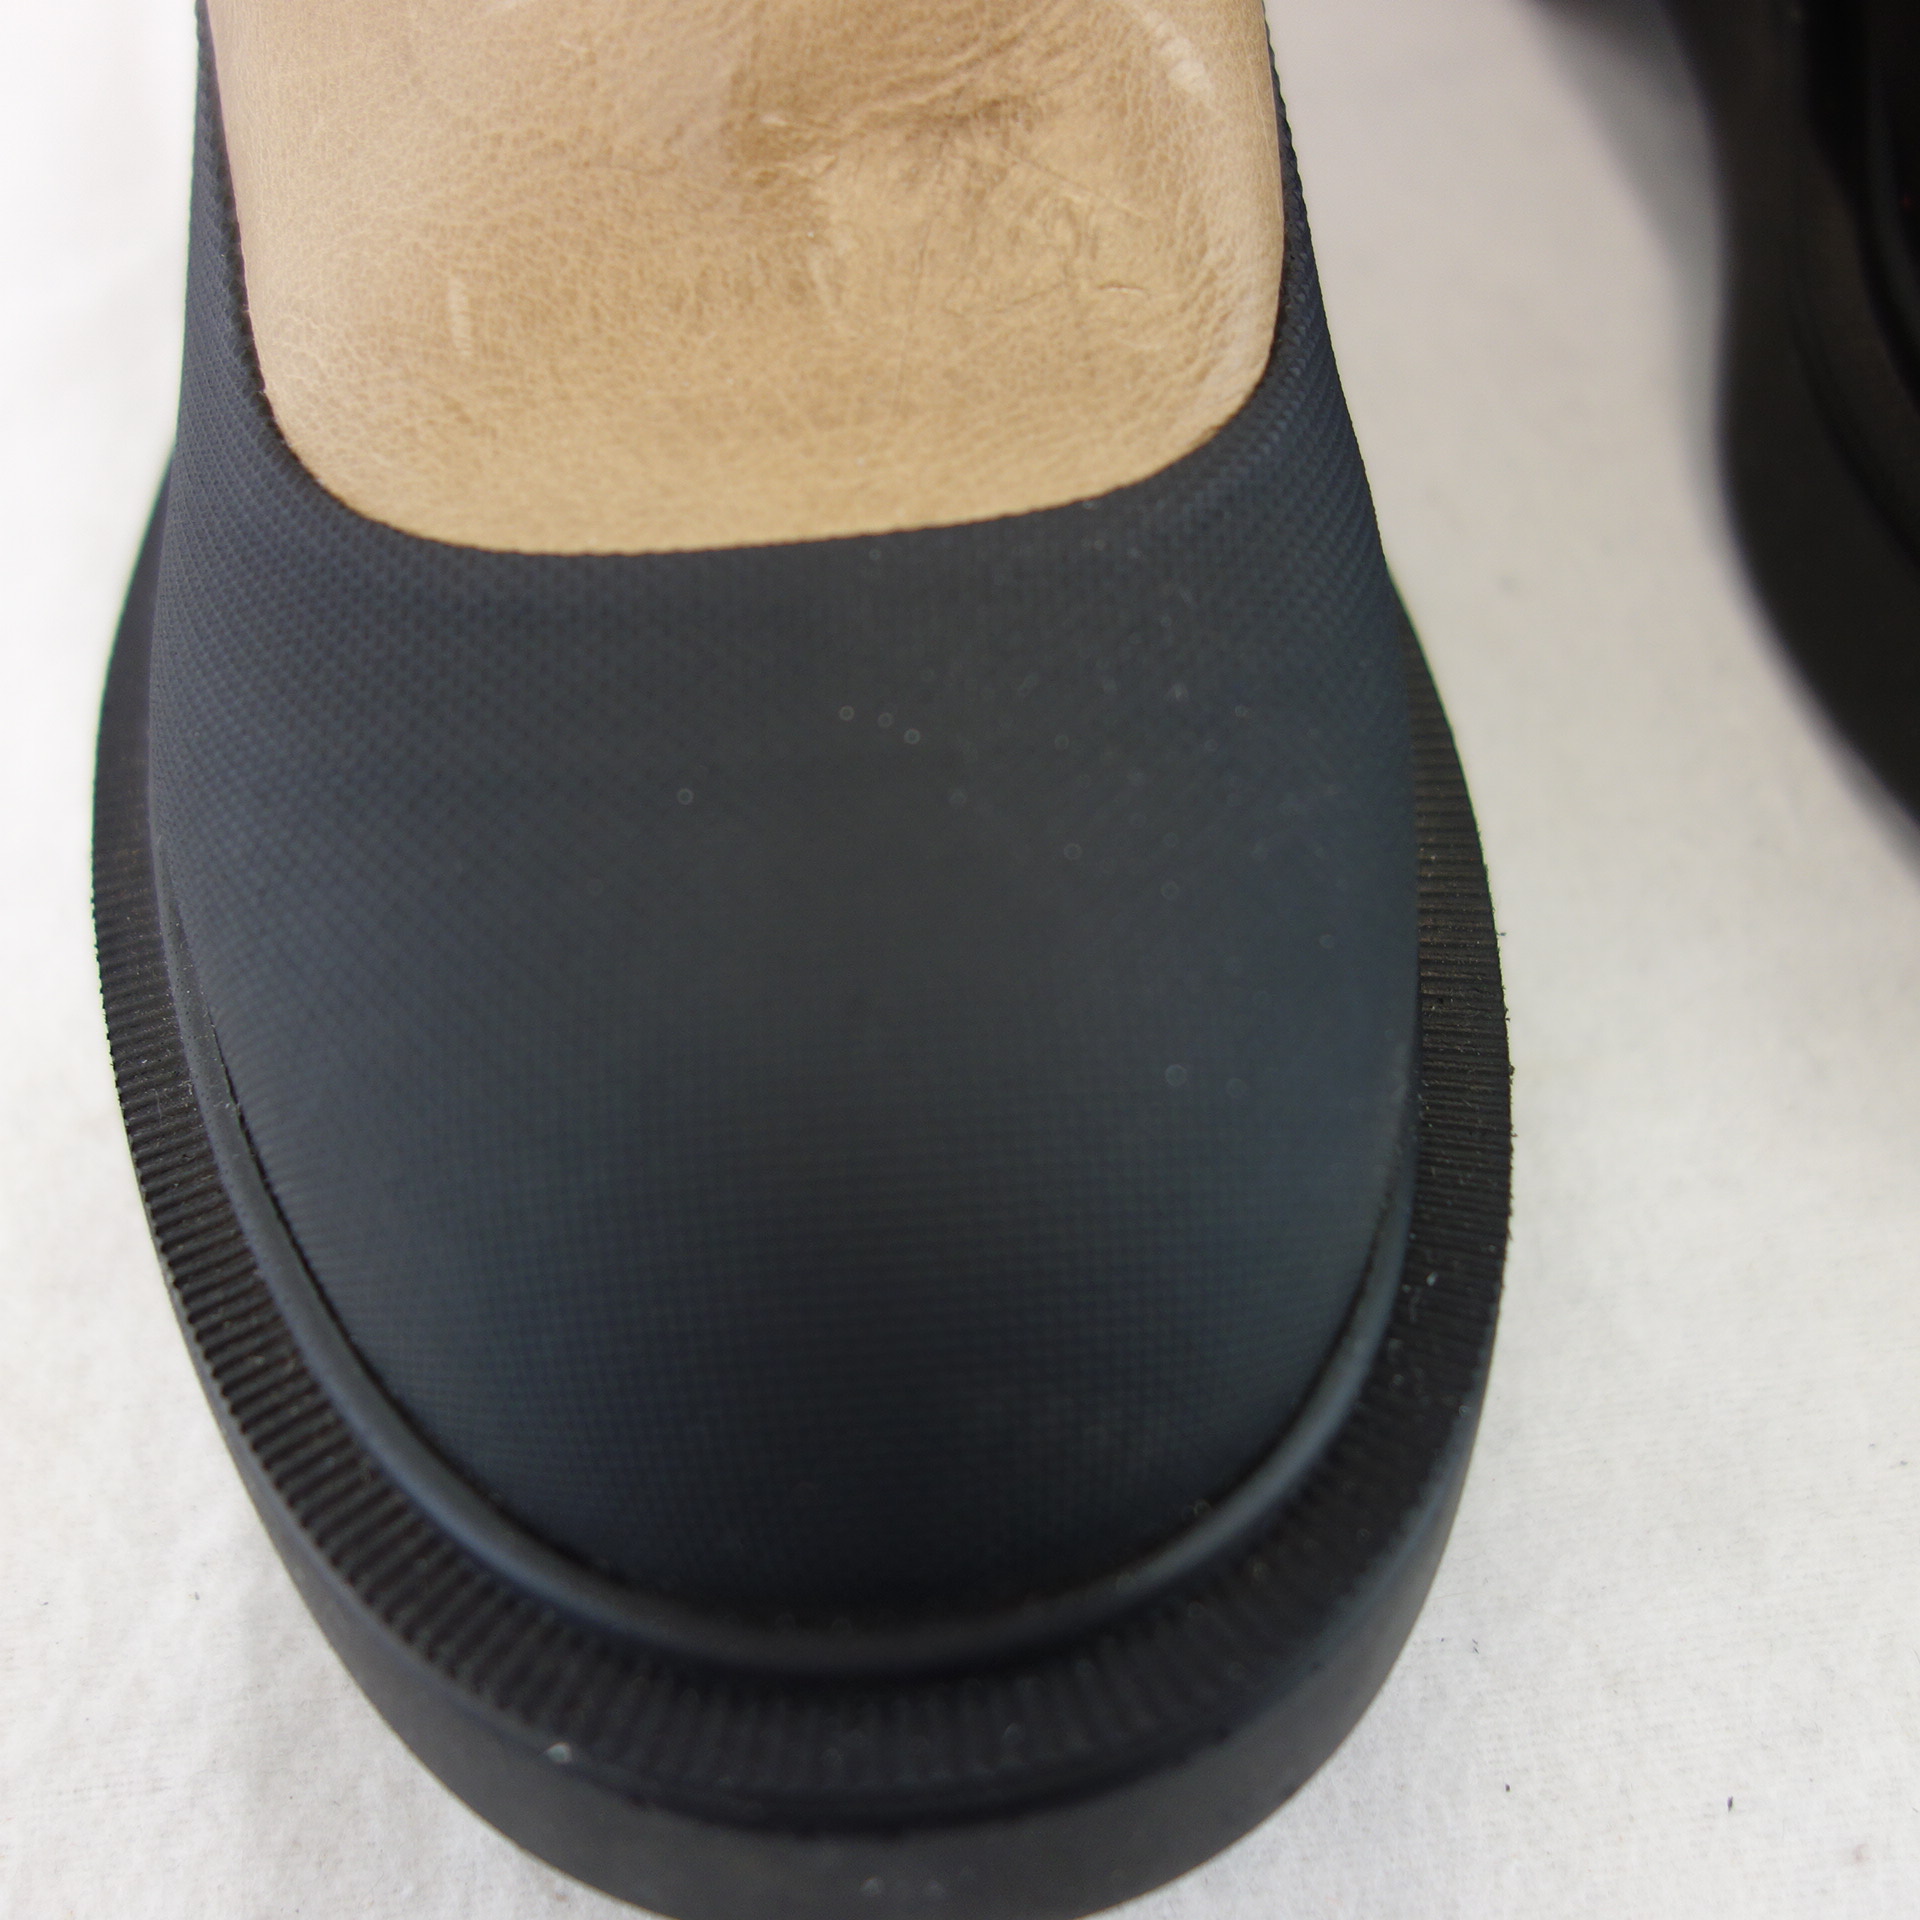 BUKELA Dänemark Damen Schuhe Stiefel Boots Stiefeletten Beige Leder Größe 37